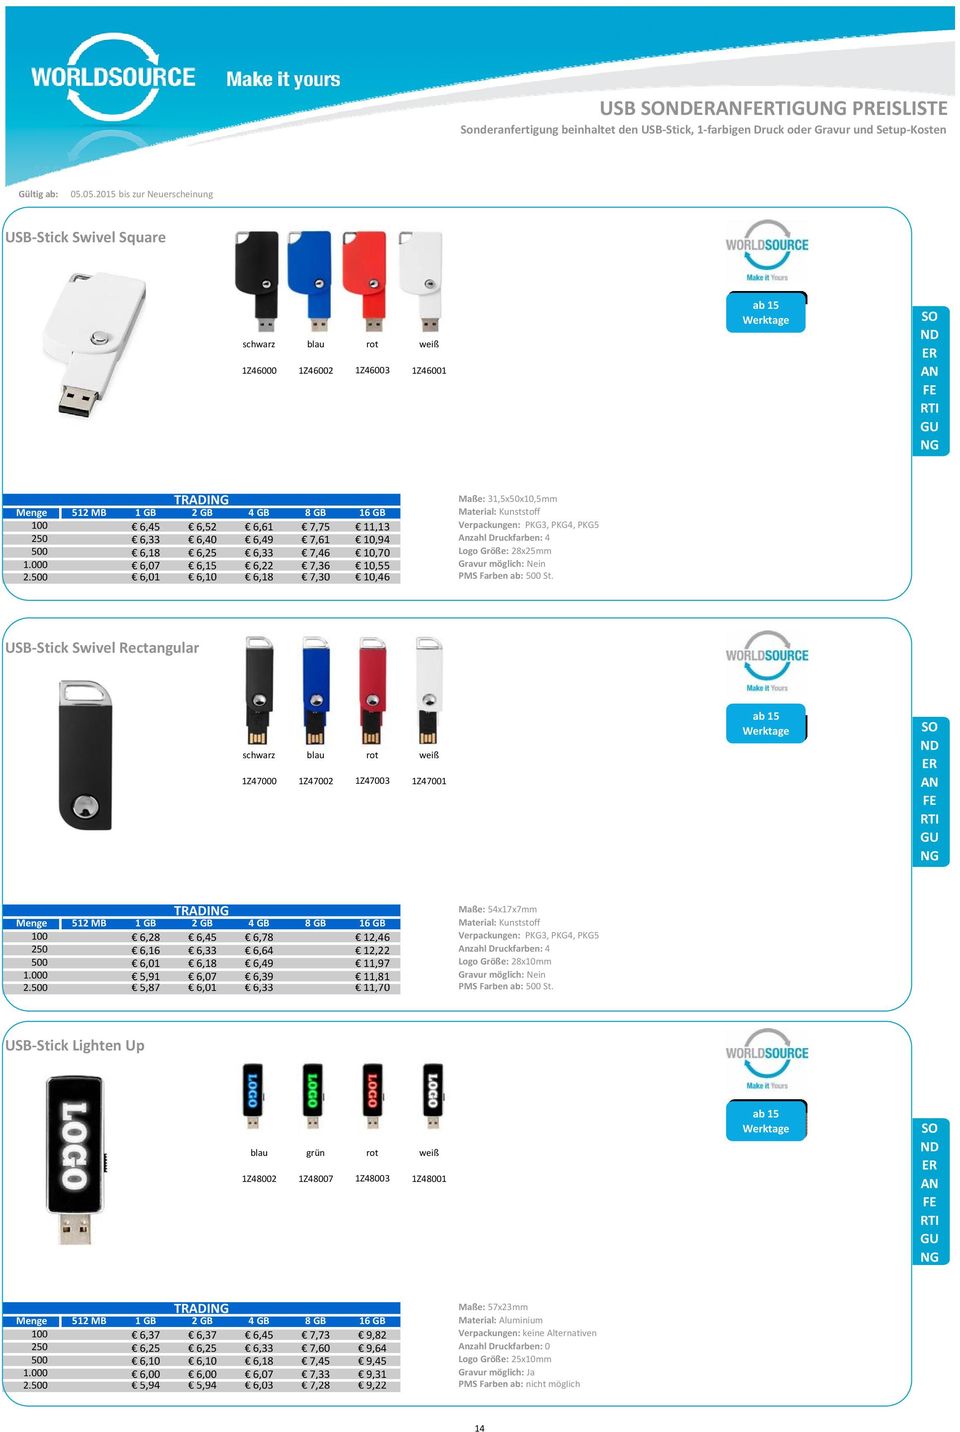 USB-Stick Swivel ectangular schwarz blau rot weiß 1Z47000 1Z47002 1Z47003 1Z47001 ab 15 TADI Maße: 54x17x7mm 100 6,28 6,45 6,78 12,46 Verpackungen: PKG3, PKG4, PKG5 250 6,16 6,33 6,64 12,22 Anzahl